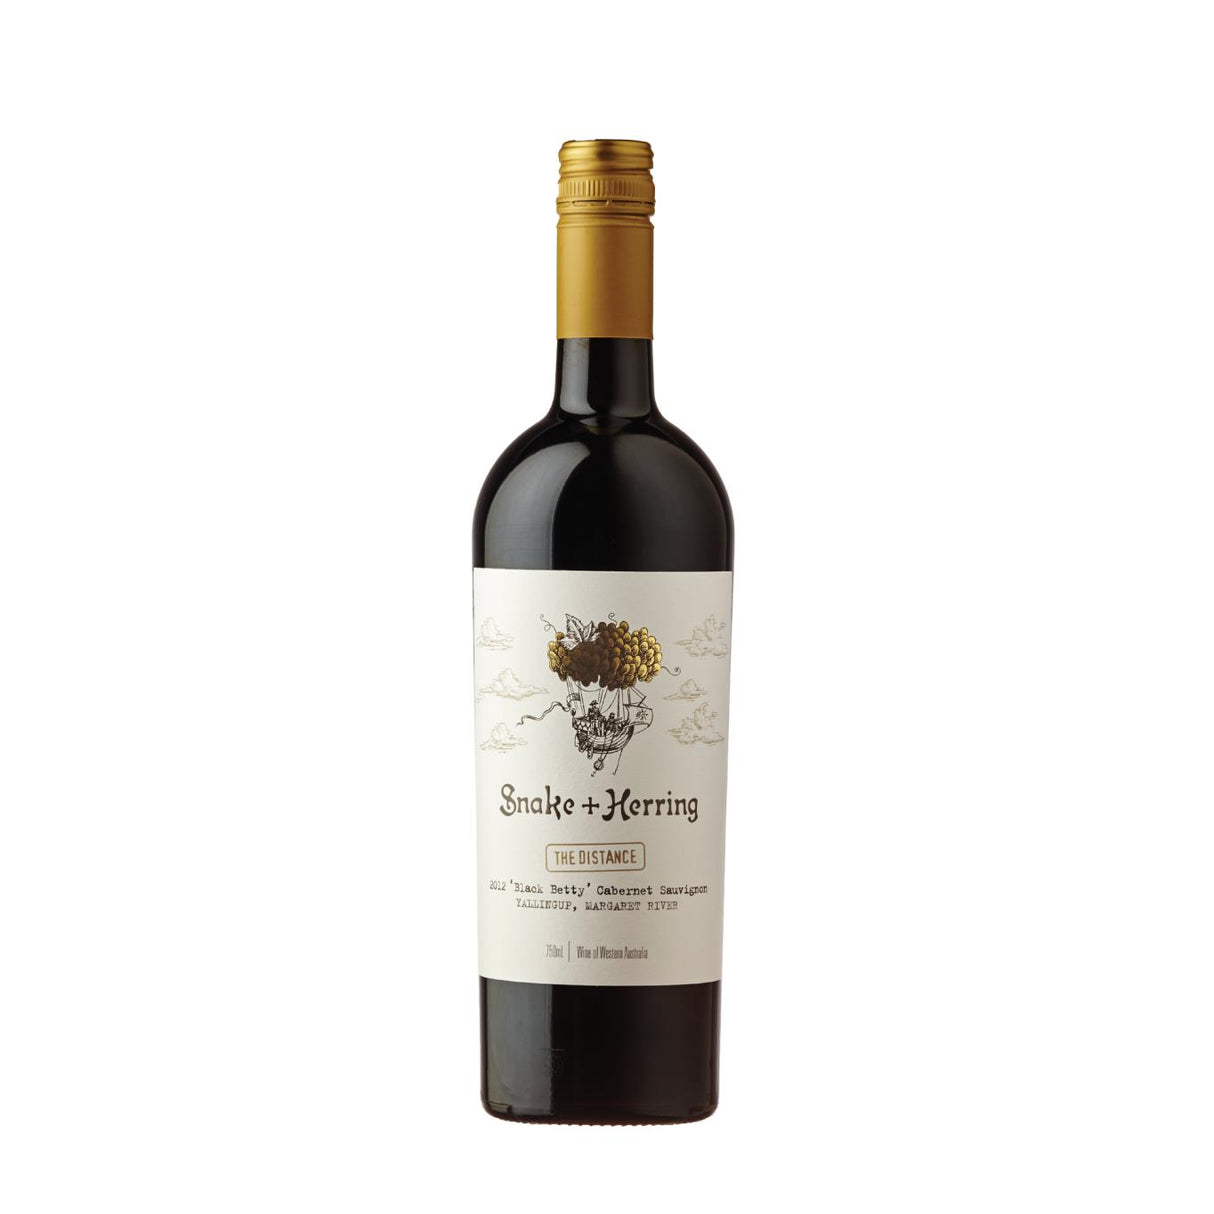 Snake & Herring "Black Betty’ Cabernet Sauvignon
Margaret River " 2019-Red Wine-World Wine